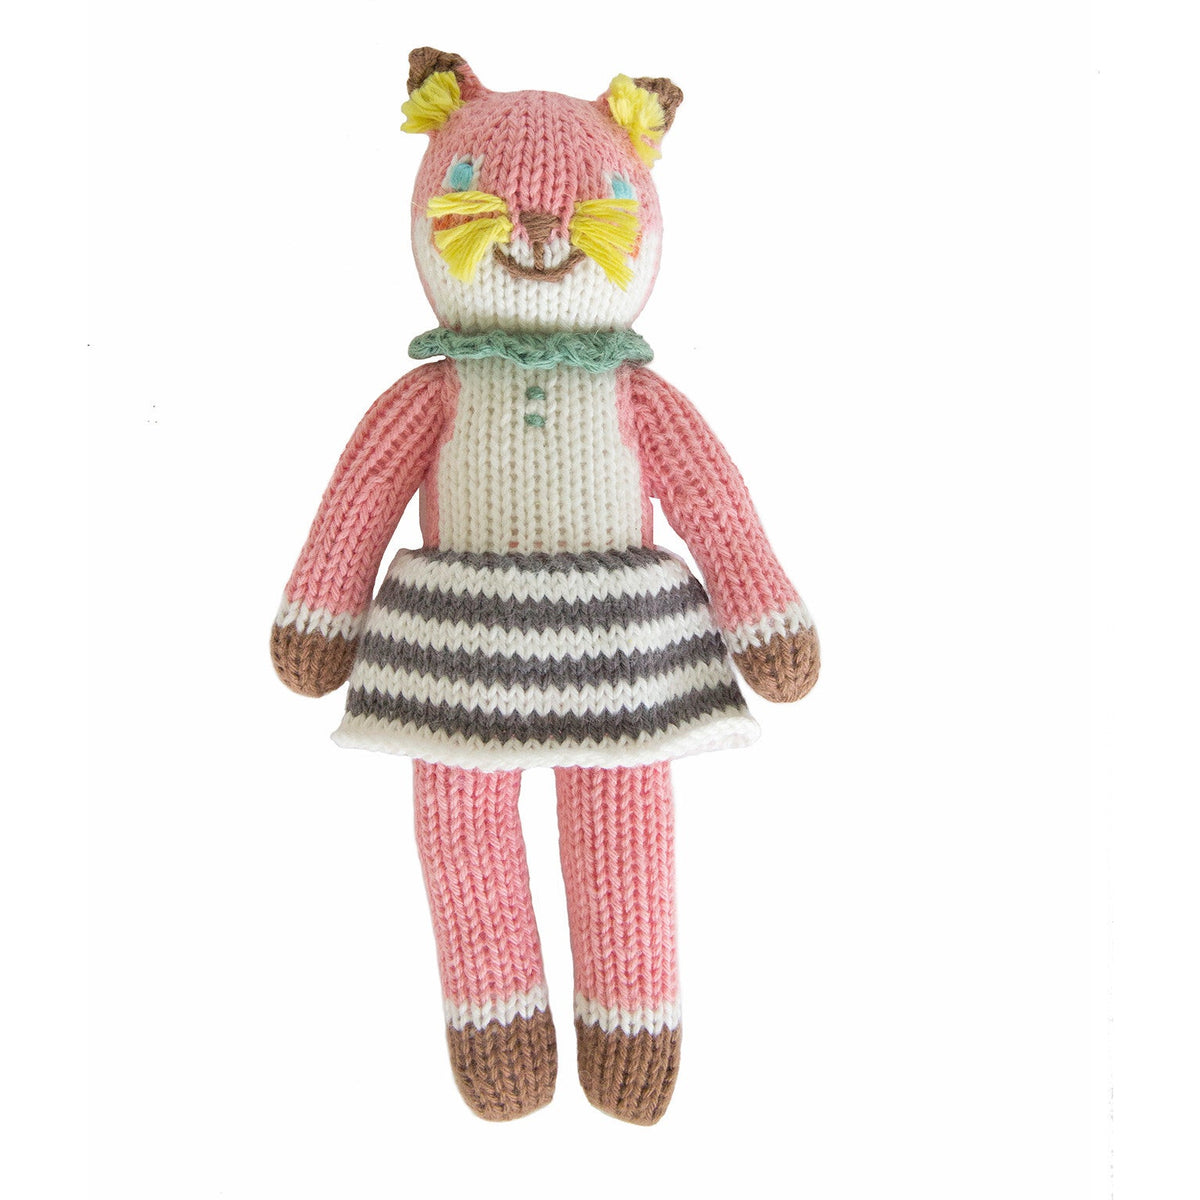 Blabla Knit Doll, Suzette the Fox - Rattle